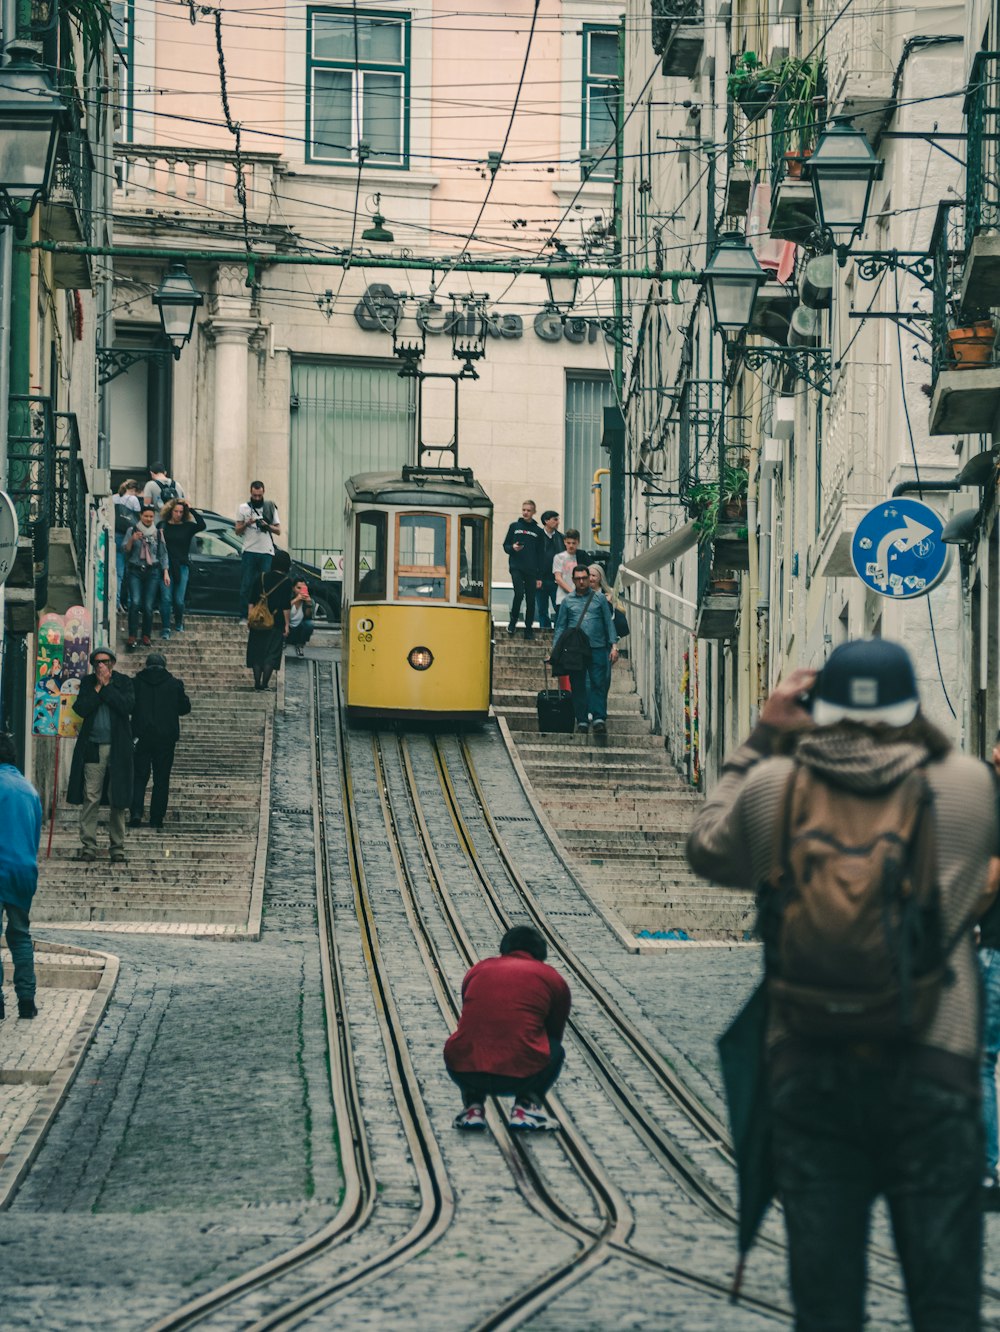 people walking on the street near yellow tram during daytime